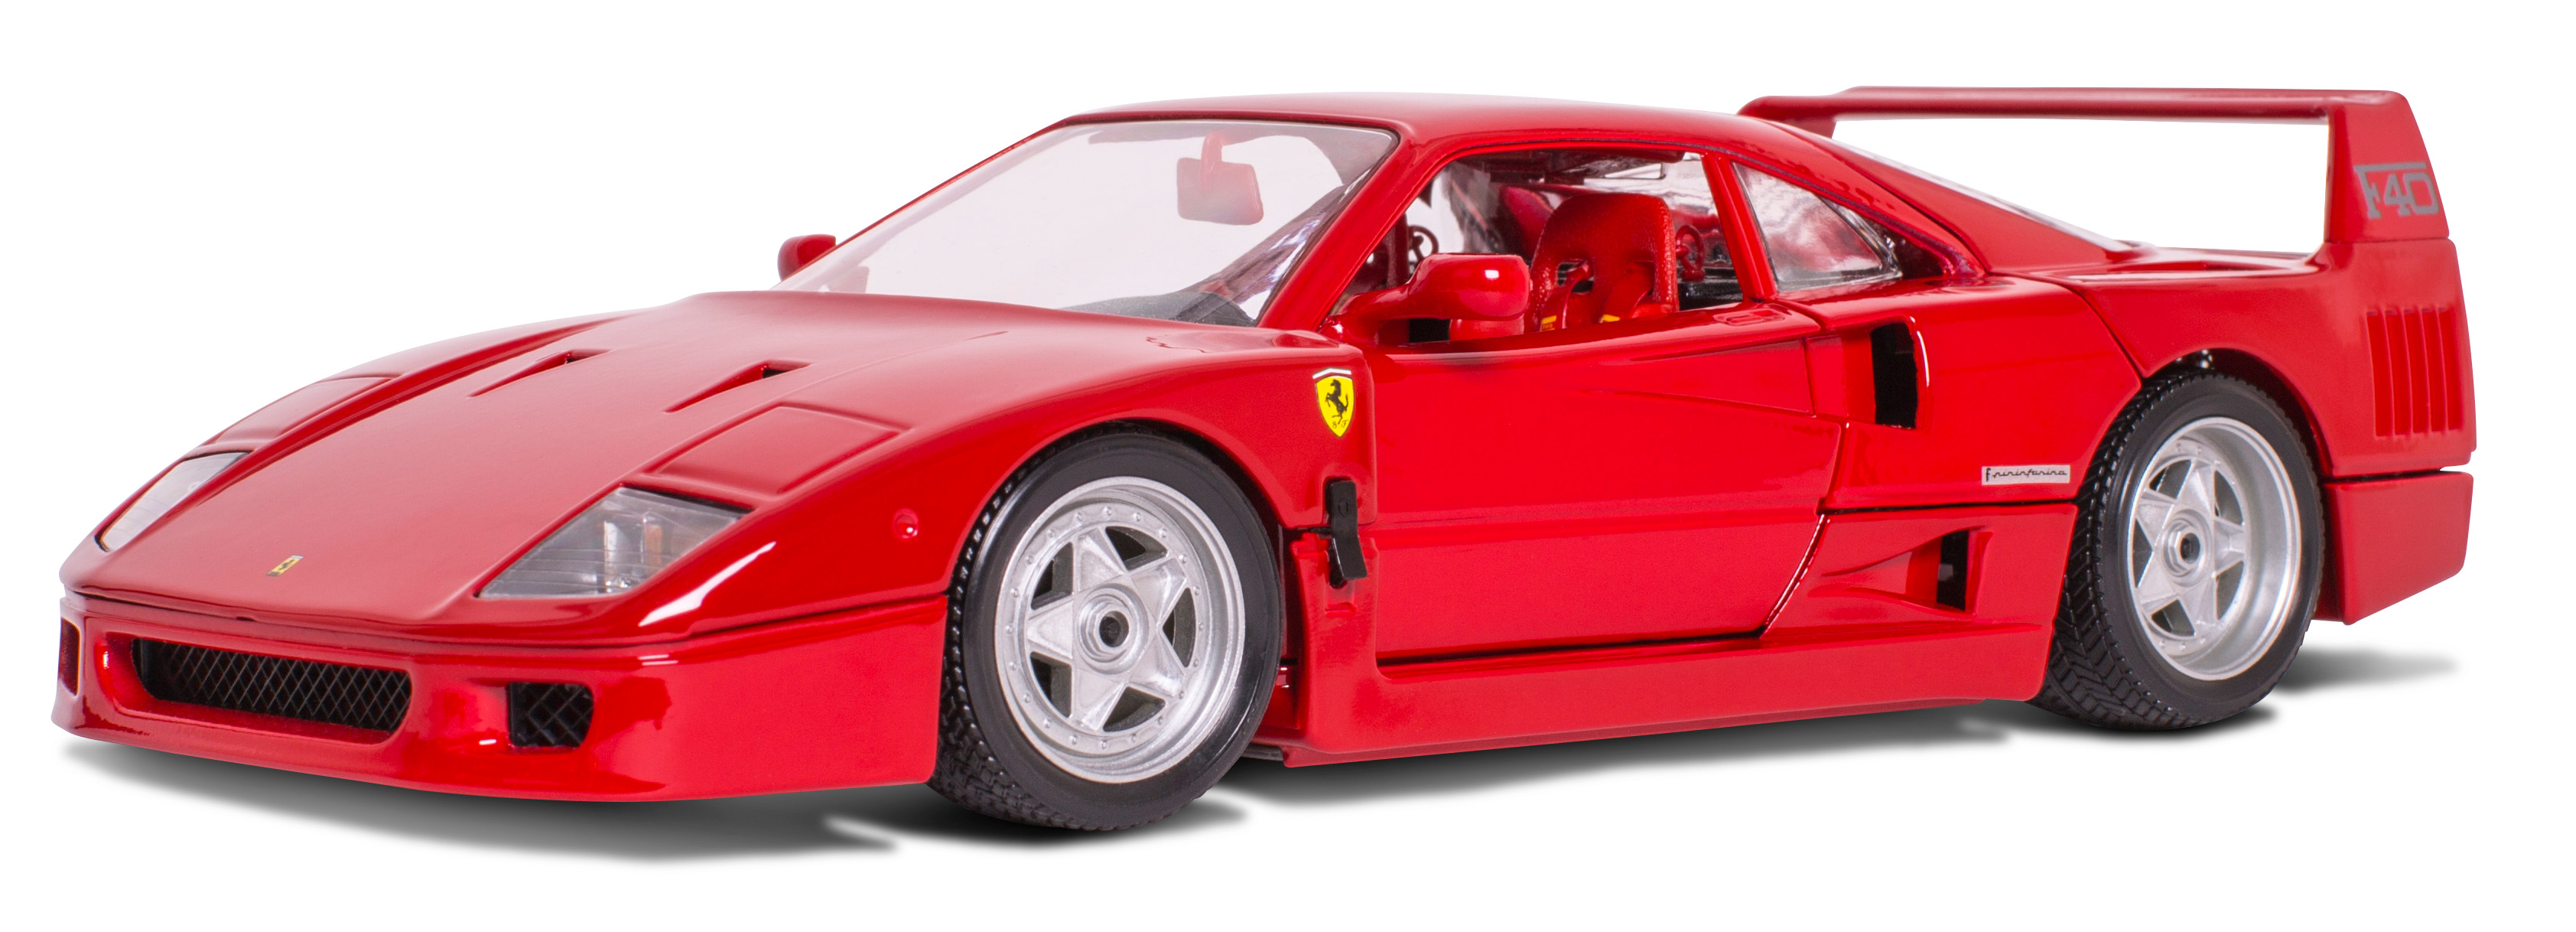 Burago 1:24 scale Ferrari F300B Formula Collection Red Made in Italy READ